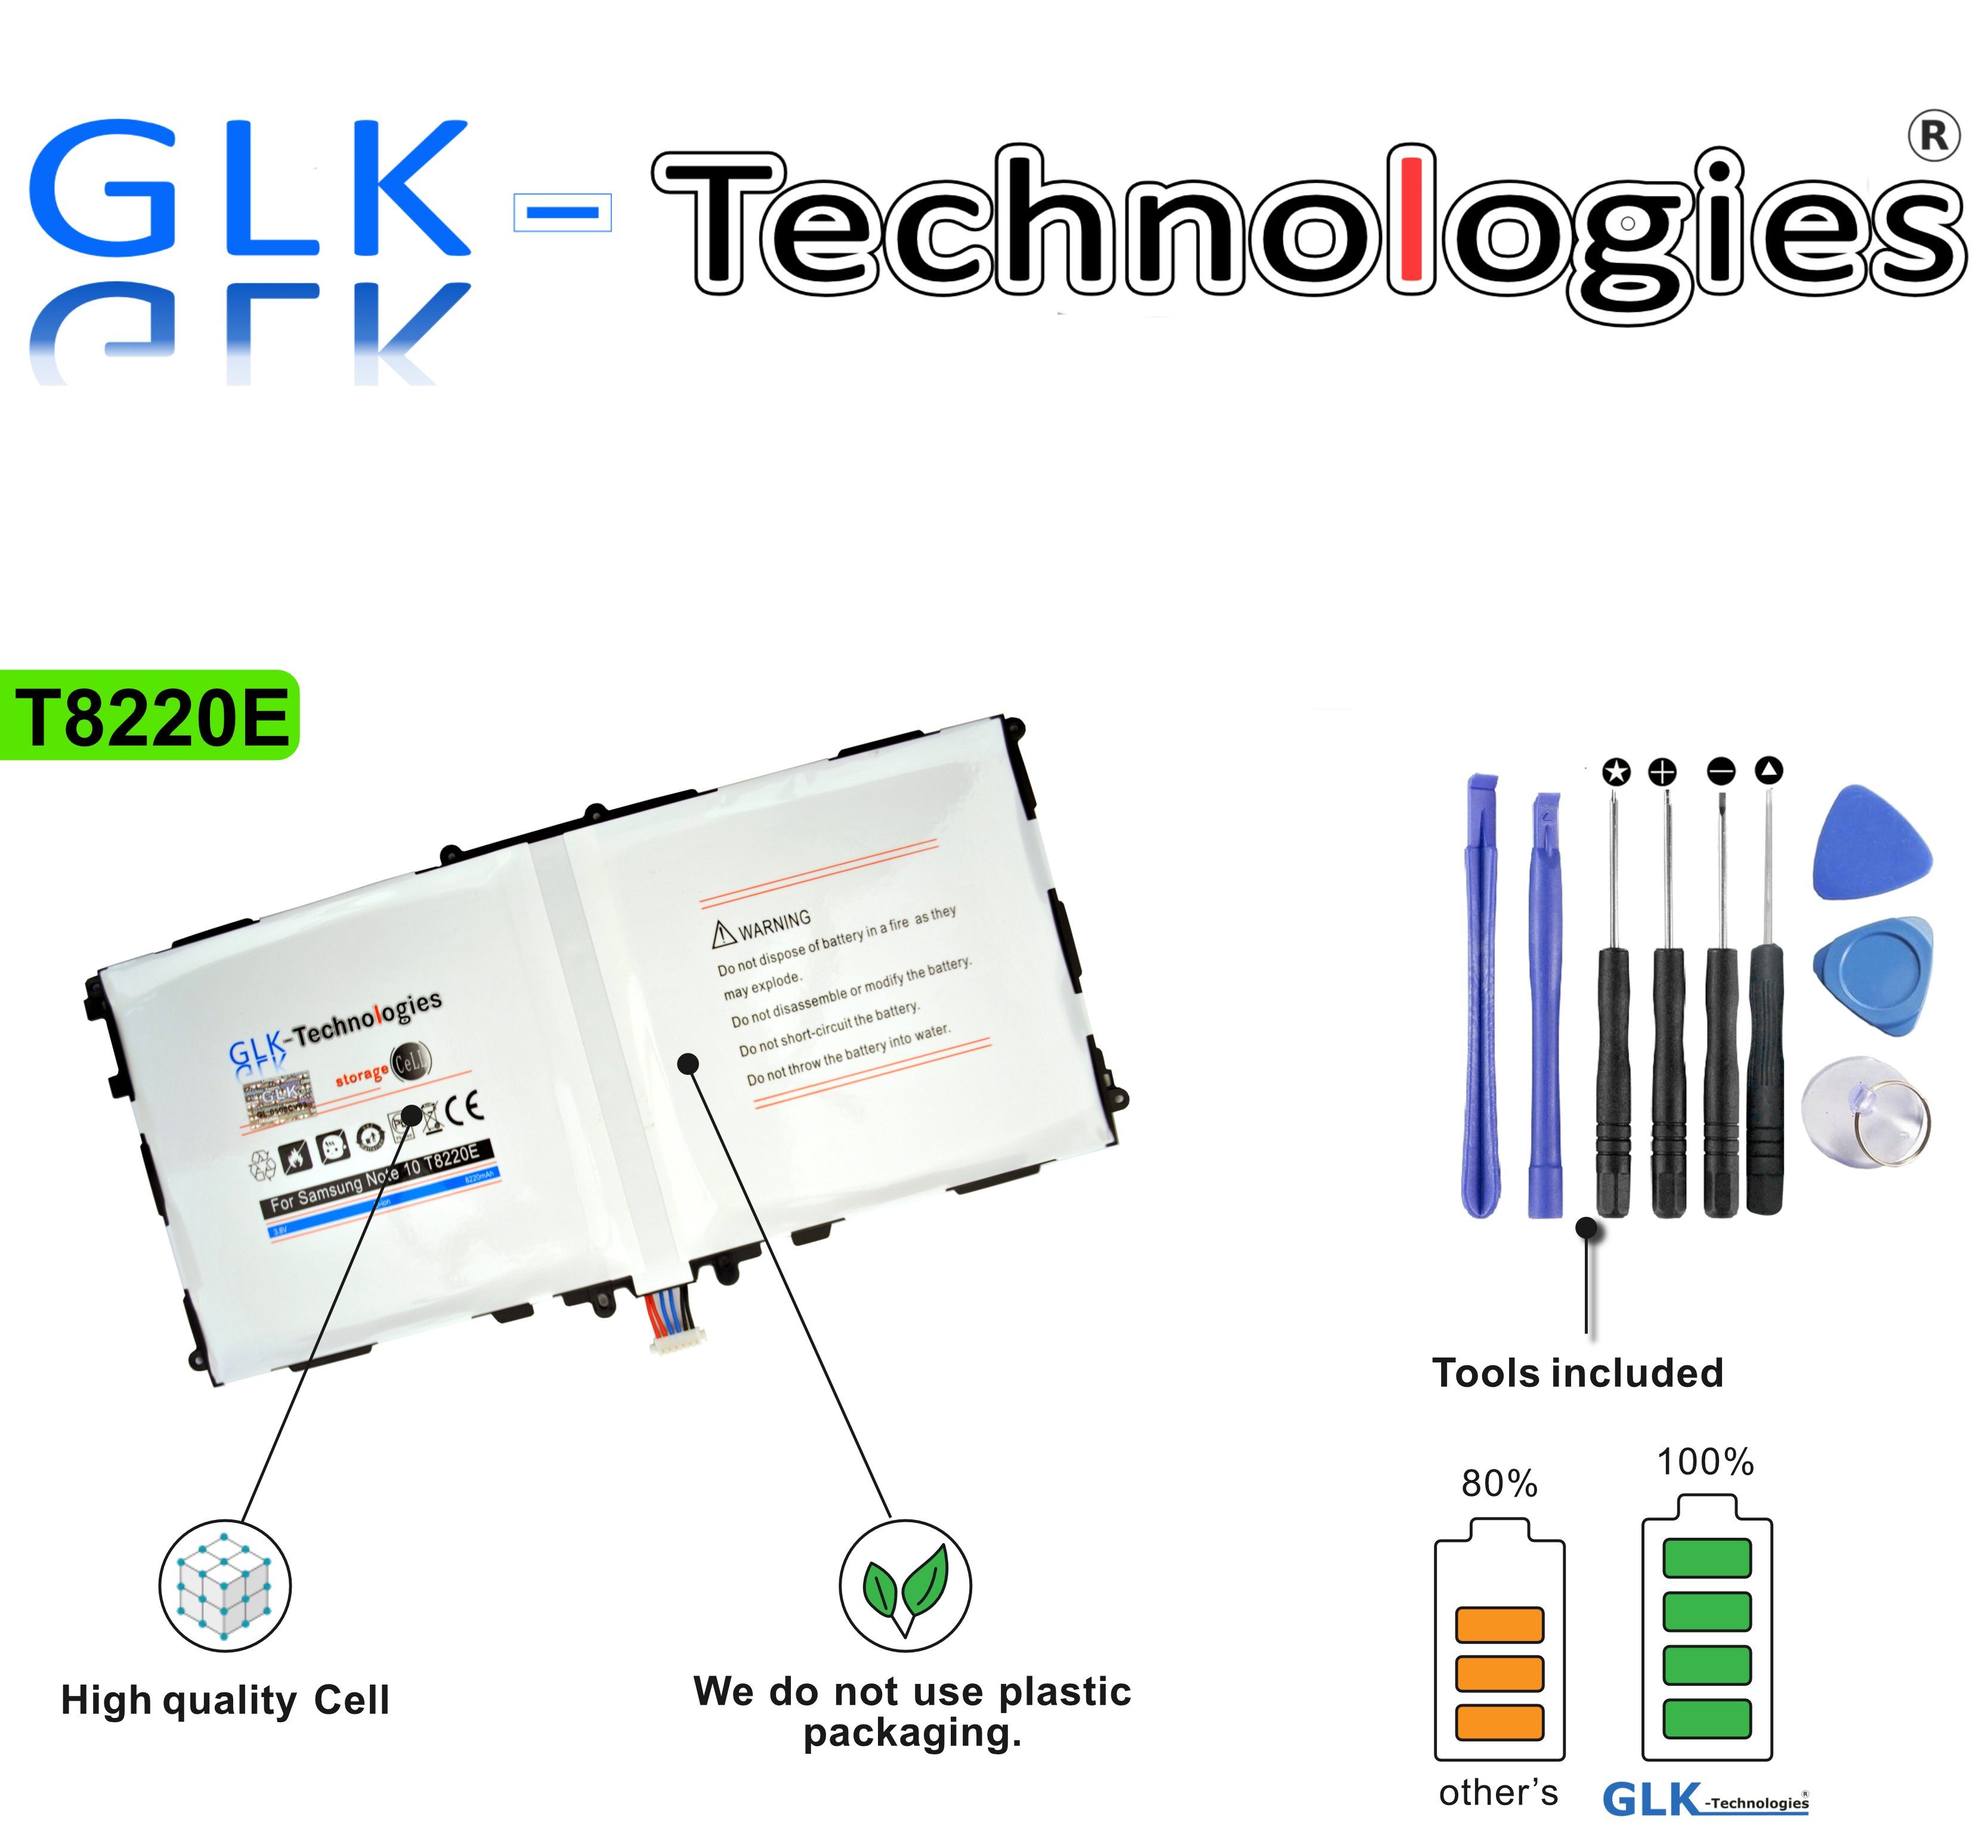 GLK-Technologies High Power Akku kompatibel mit Samsung Galaxy Note 10.1 2014 SM-P600/ SM-P601/ SM P605 T8220E, T8220, Original GLK-Technologies® Batterie, 8220 mAh Kapazität, inkl Werkzeugset Tablet-Akku 8220 mAh (3.8 V)